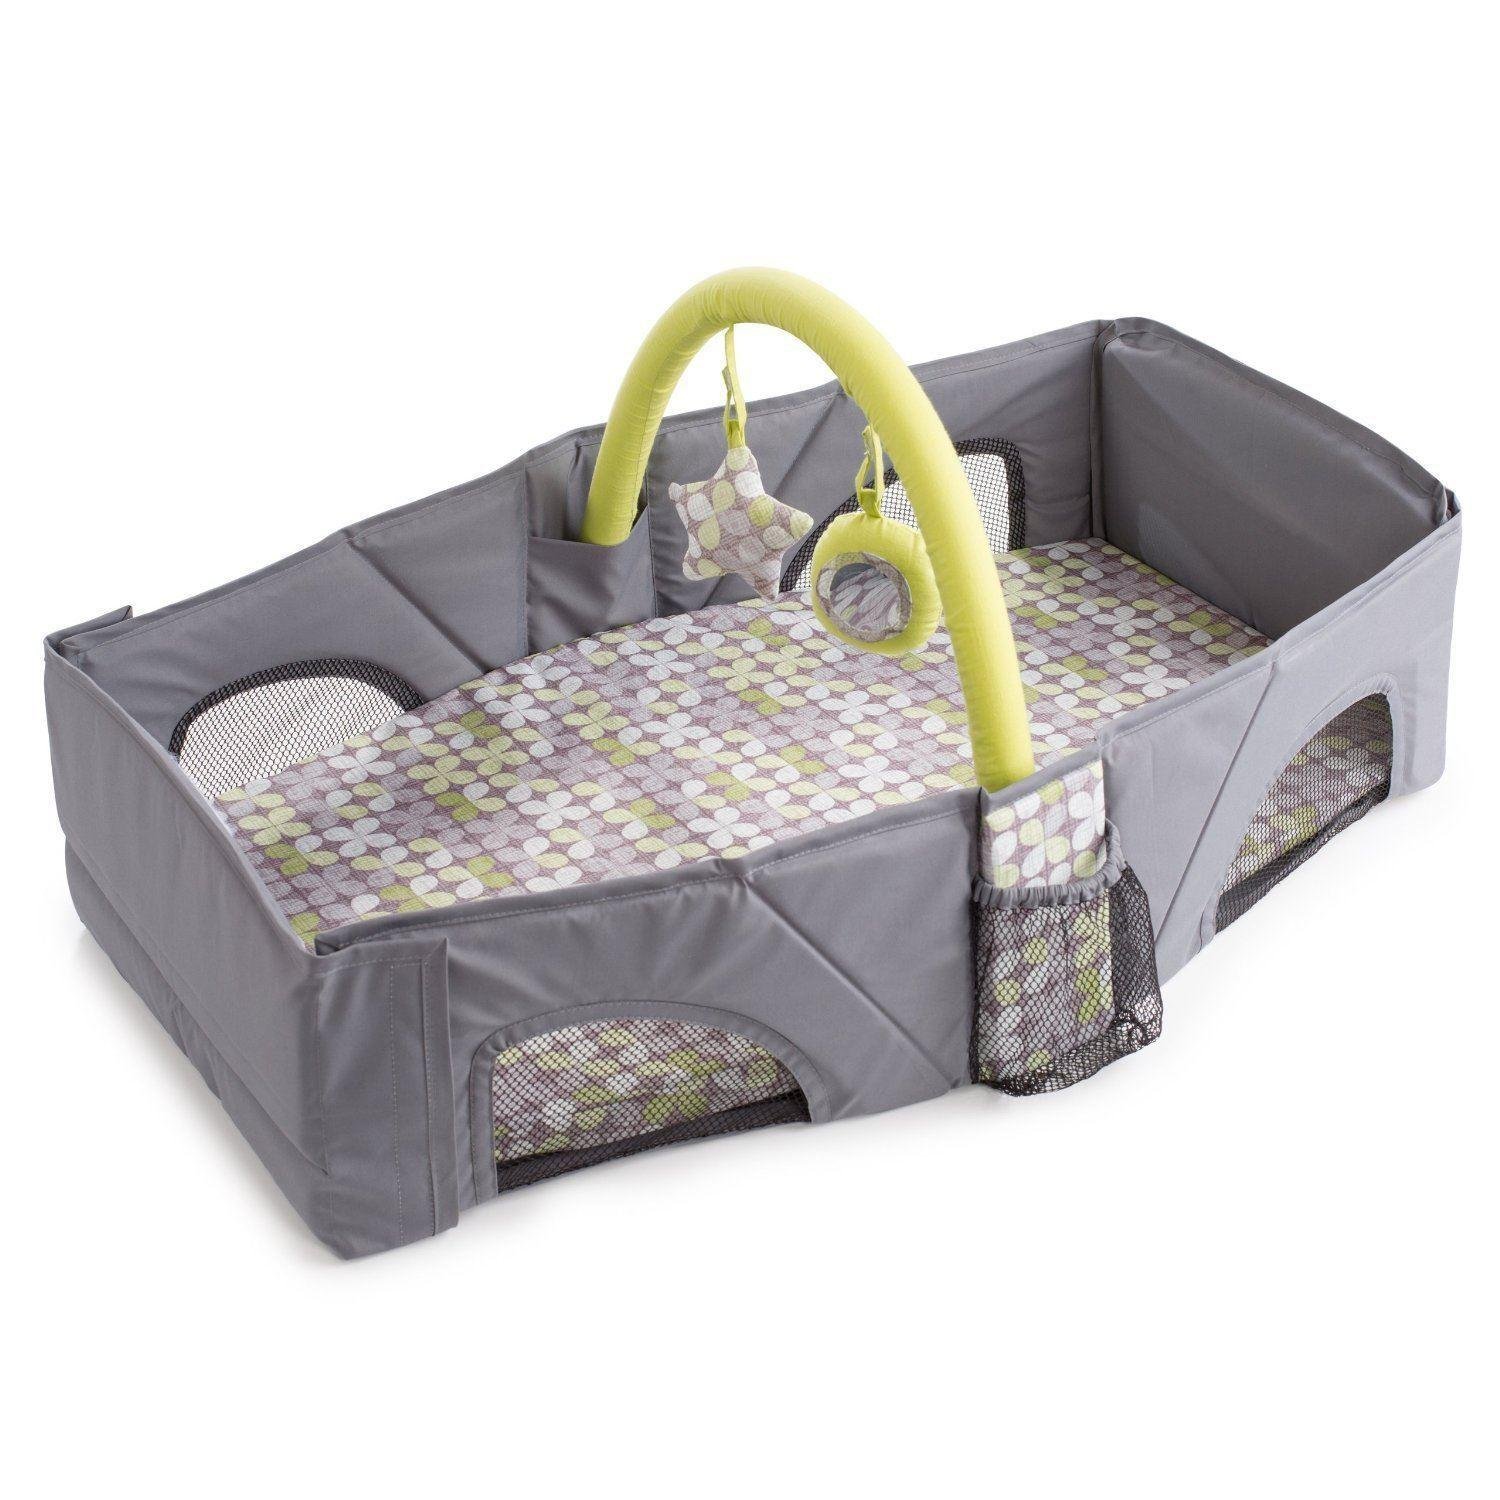 Portable Baby Cribs Newborn Travel Sleep Bag Infant Travel Bed Safe Cot Portable 3